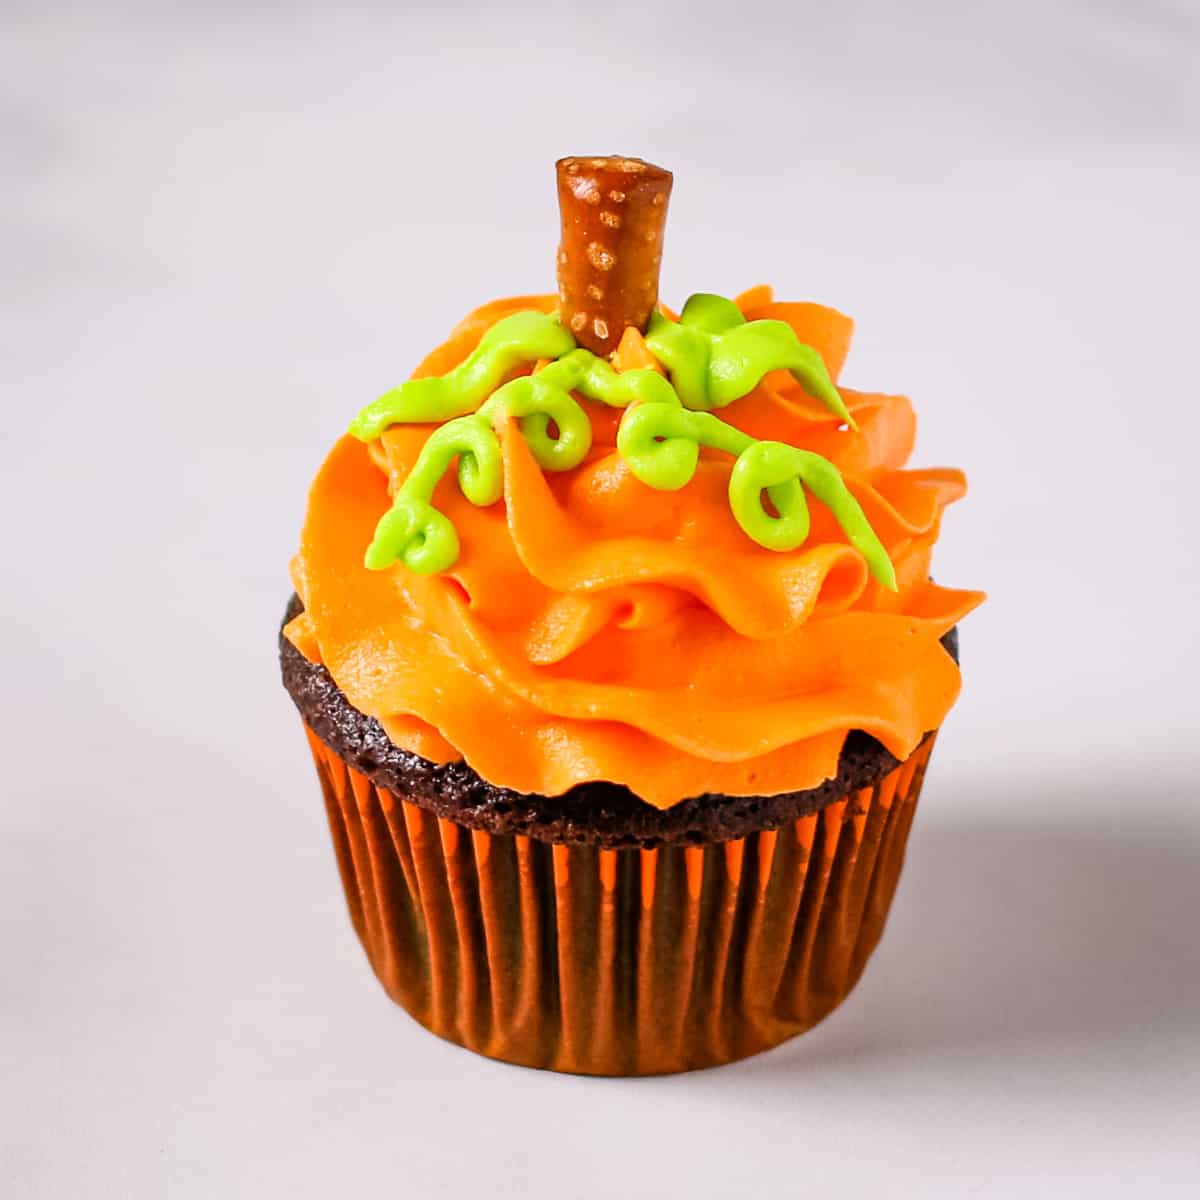 A chocolate cupcake decorated as an orange Halloween pumpkin.